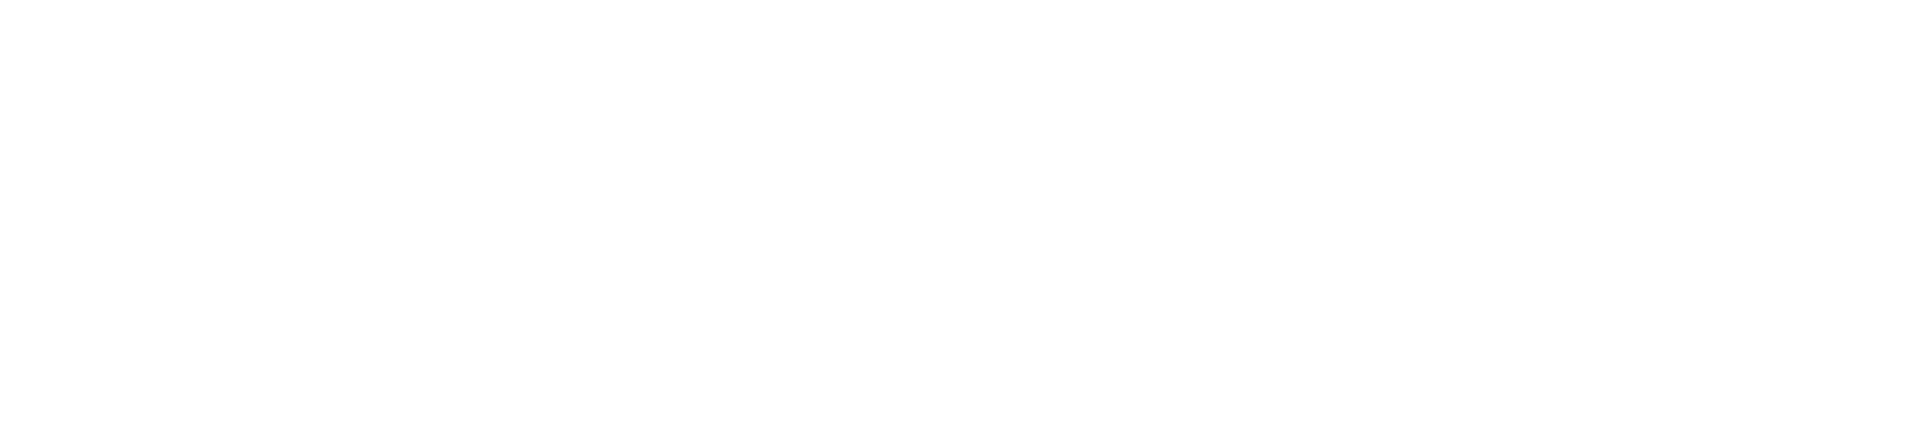 Prosec logo white